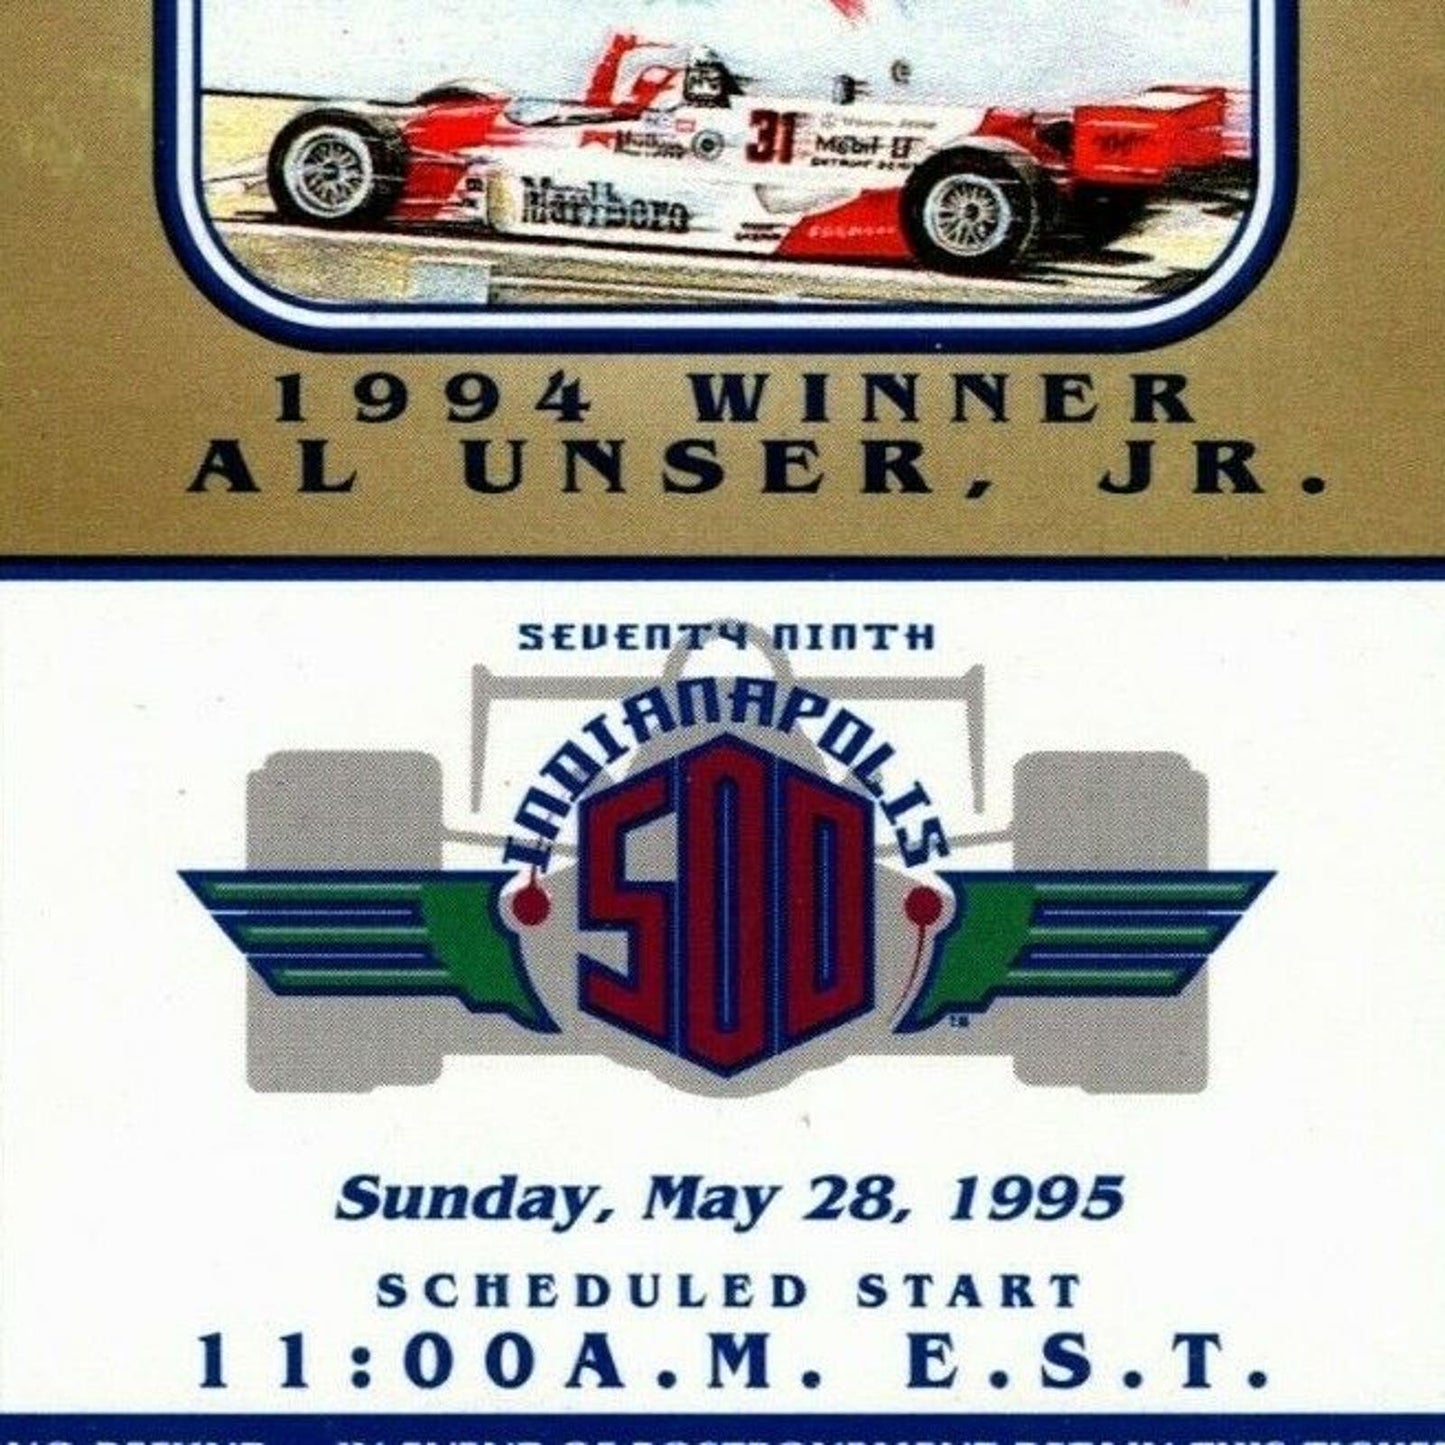 Indy 500 1995 Ticket Stub "Indianapolis 500" $65 Adm. Seat 7 w/ IMS Lanyard